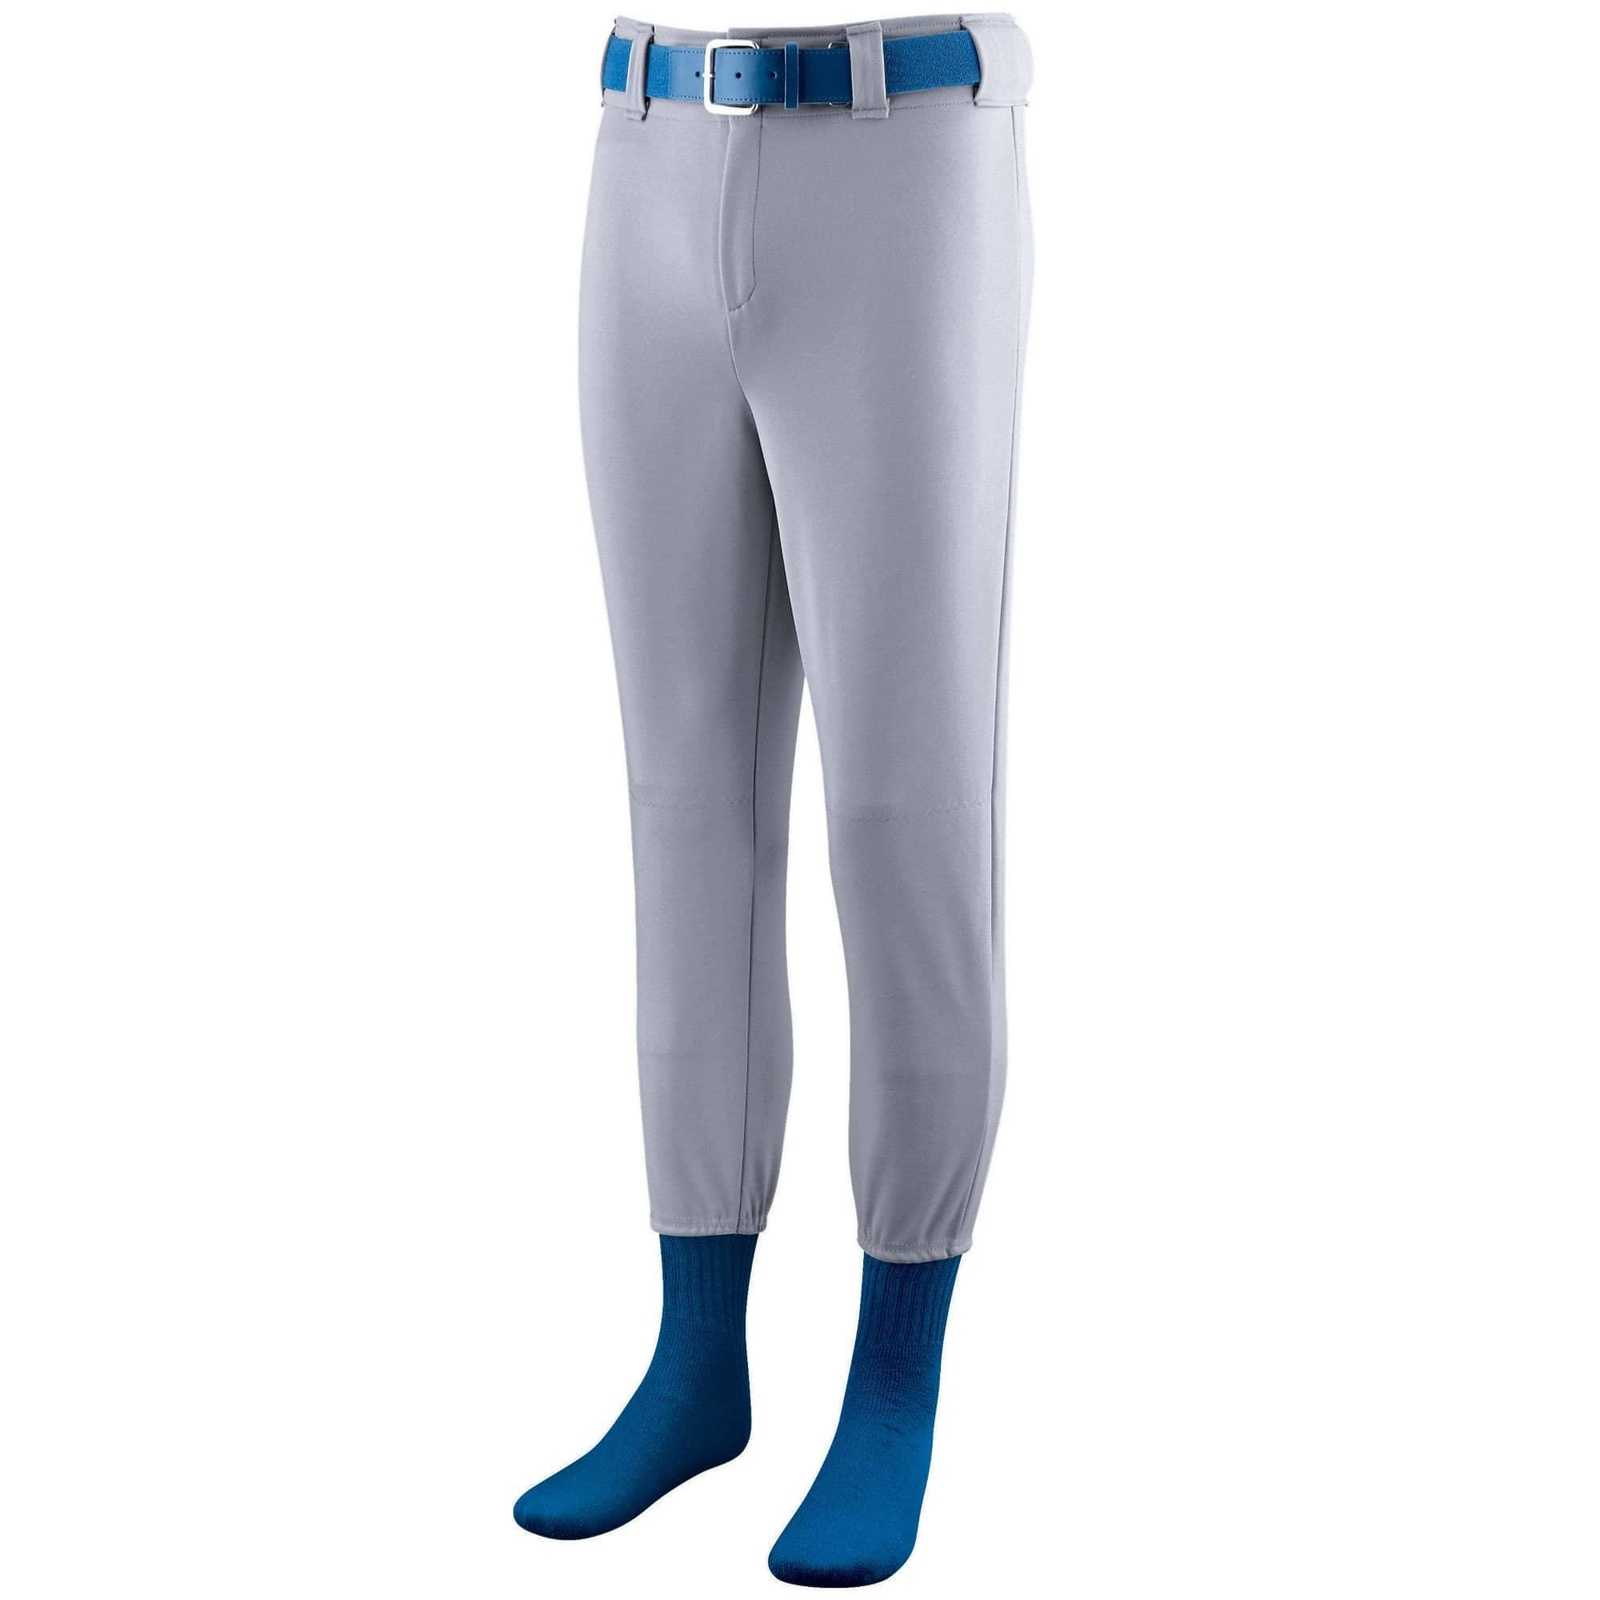 Augusta 811 Softball Baseball Pant Youth - Blue Gray - HIT a Double